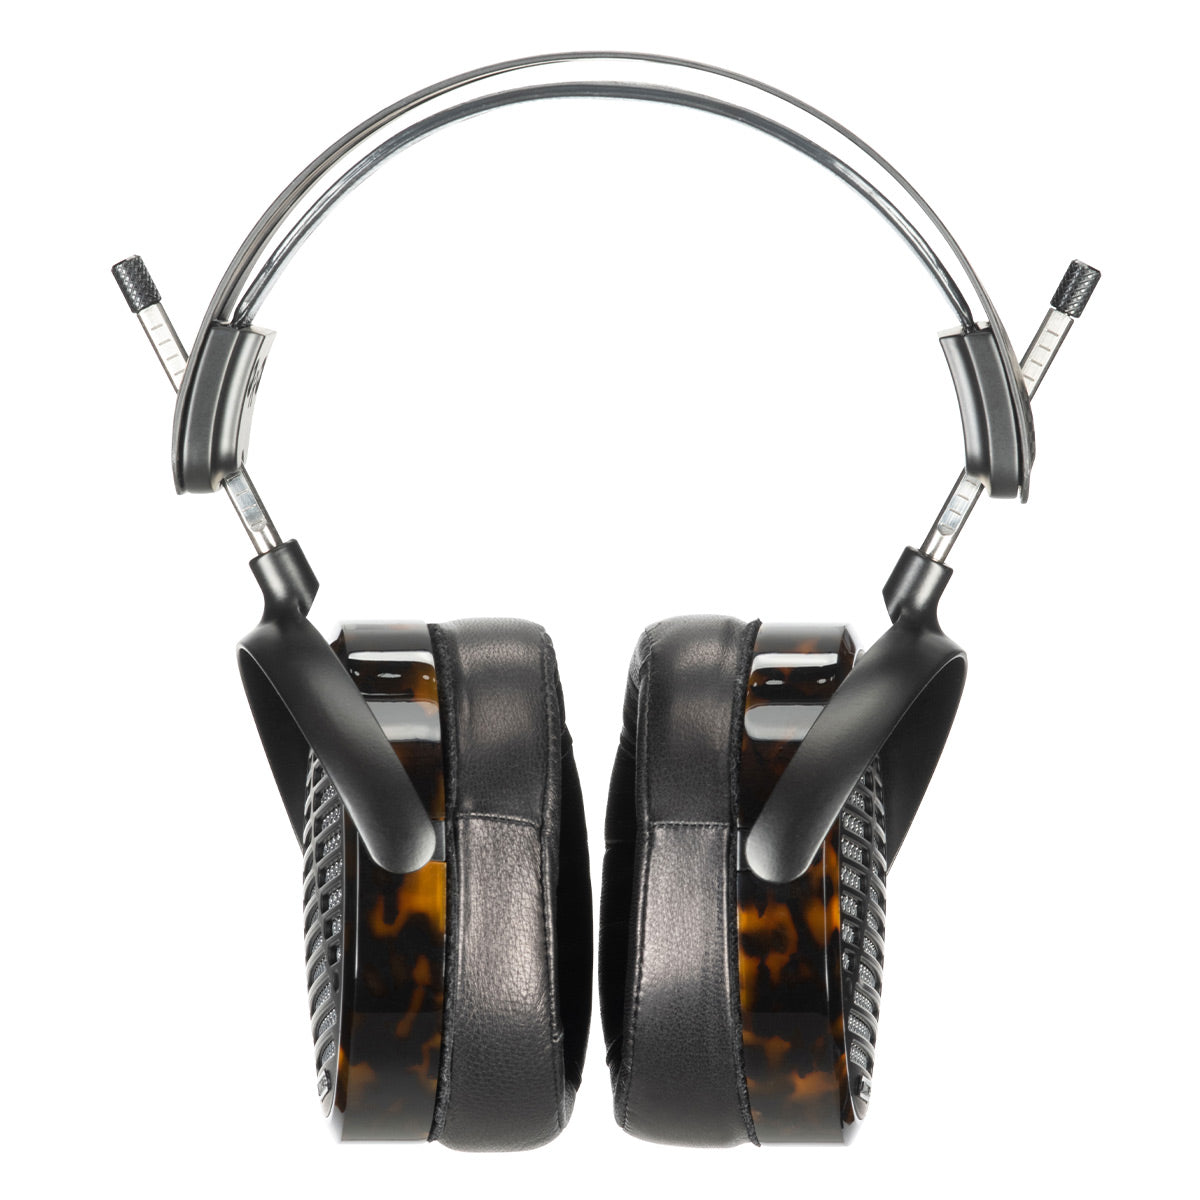 Audeze LCD-5 Open-Back Planar Magnetic Over-Ear Headphones